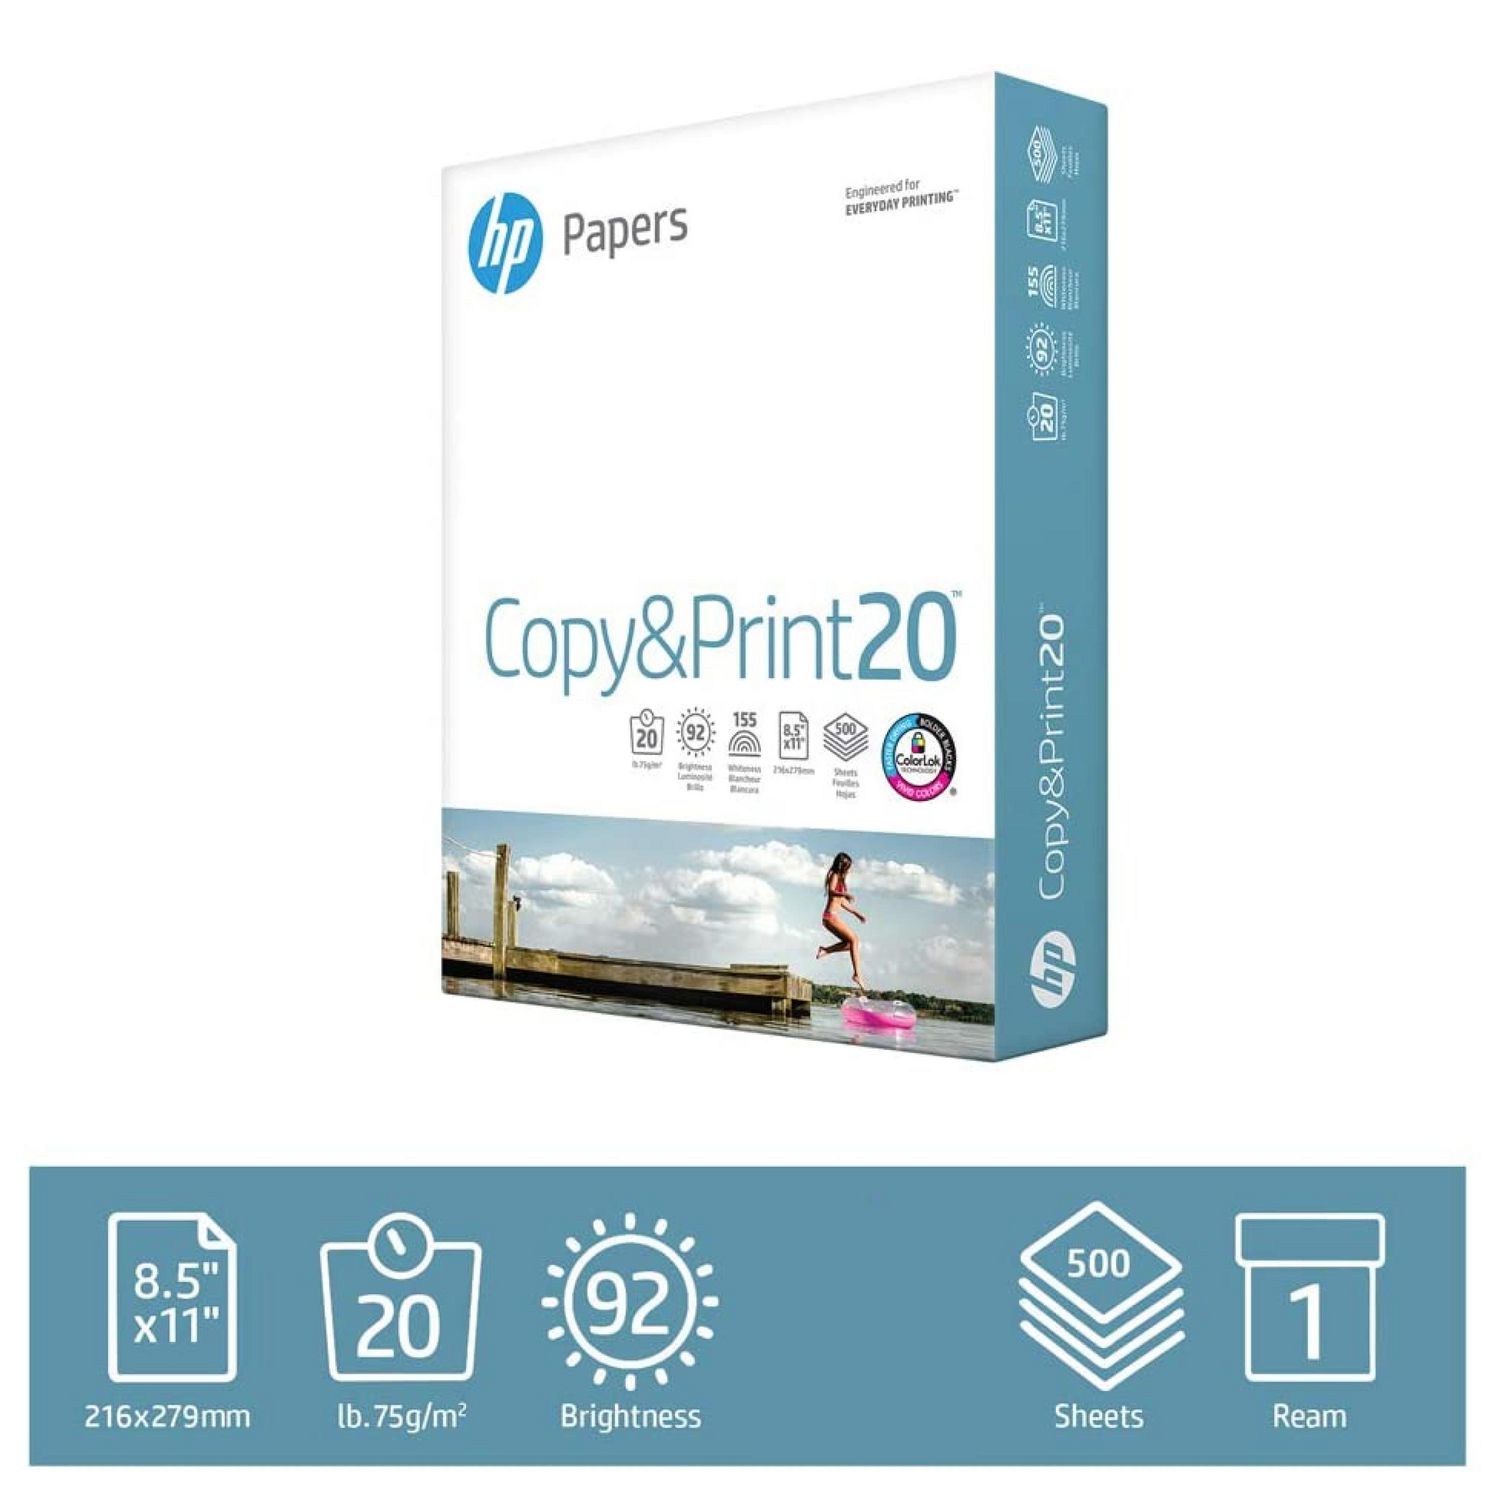 krak stole bag HP Copy & Print20 Printer Paper | Walmart Canada